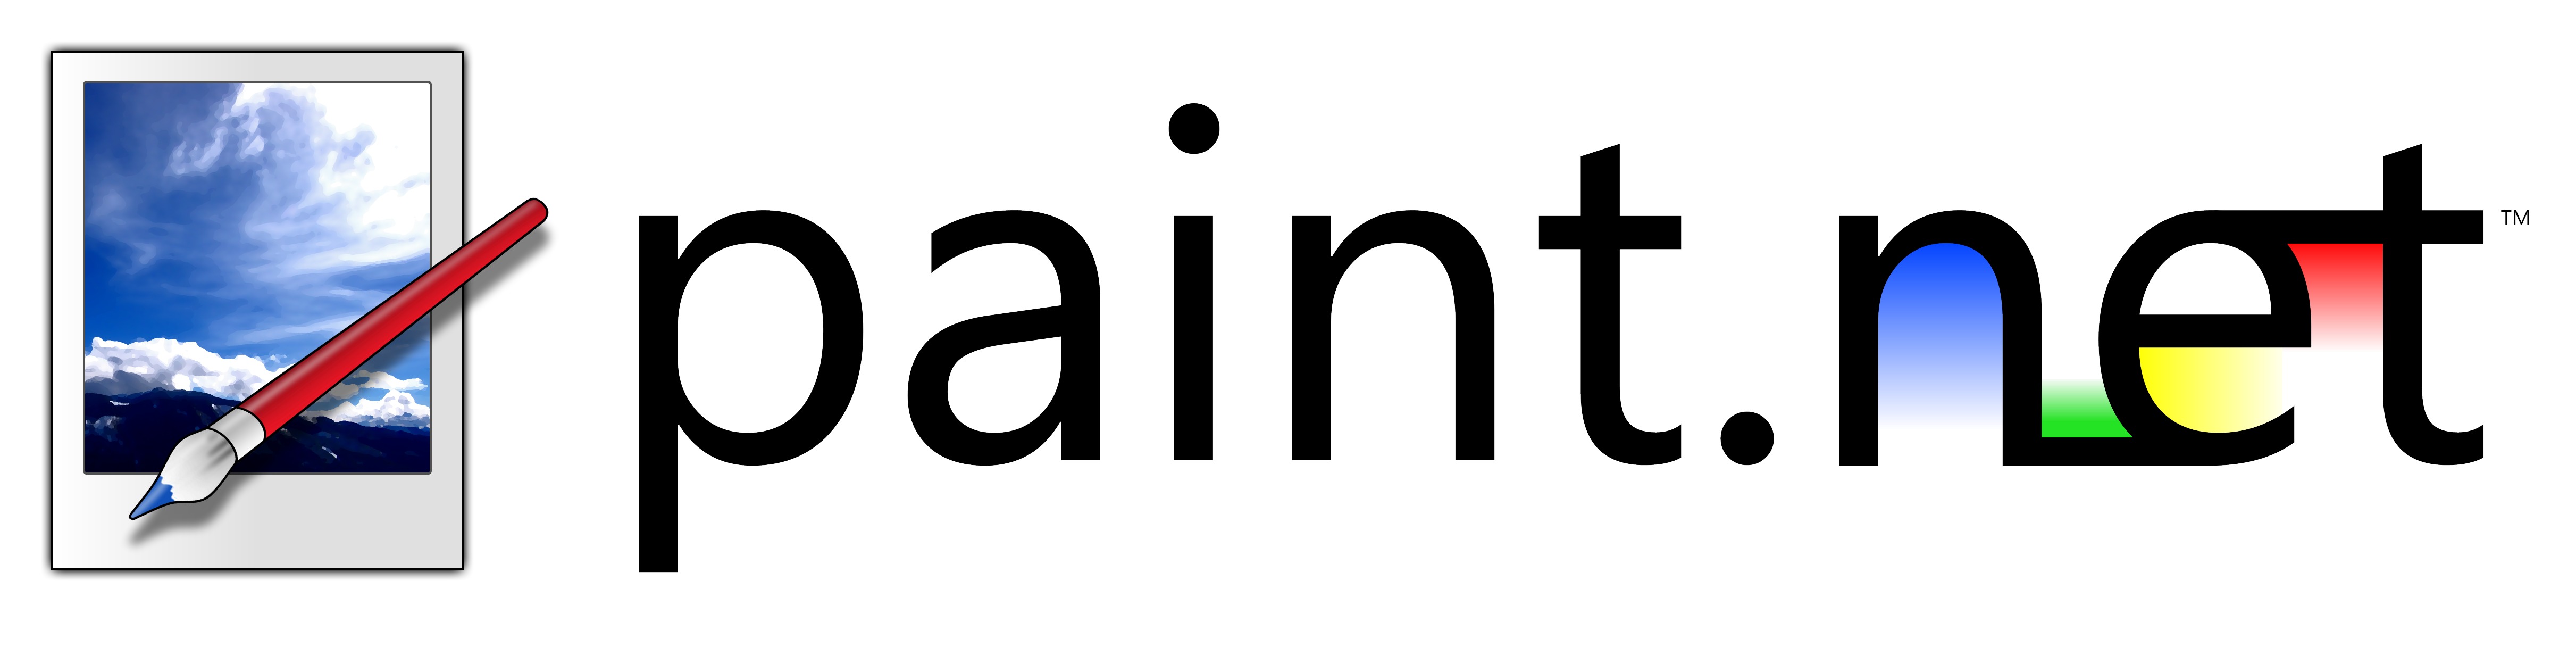 Paint.NET 5.0.7 free instals